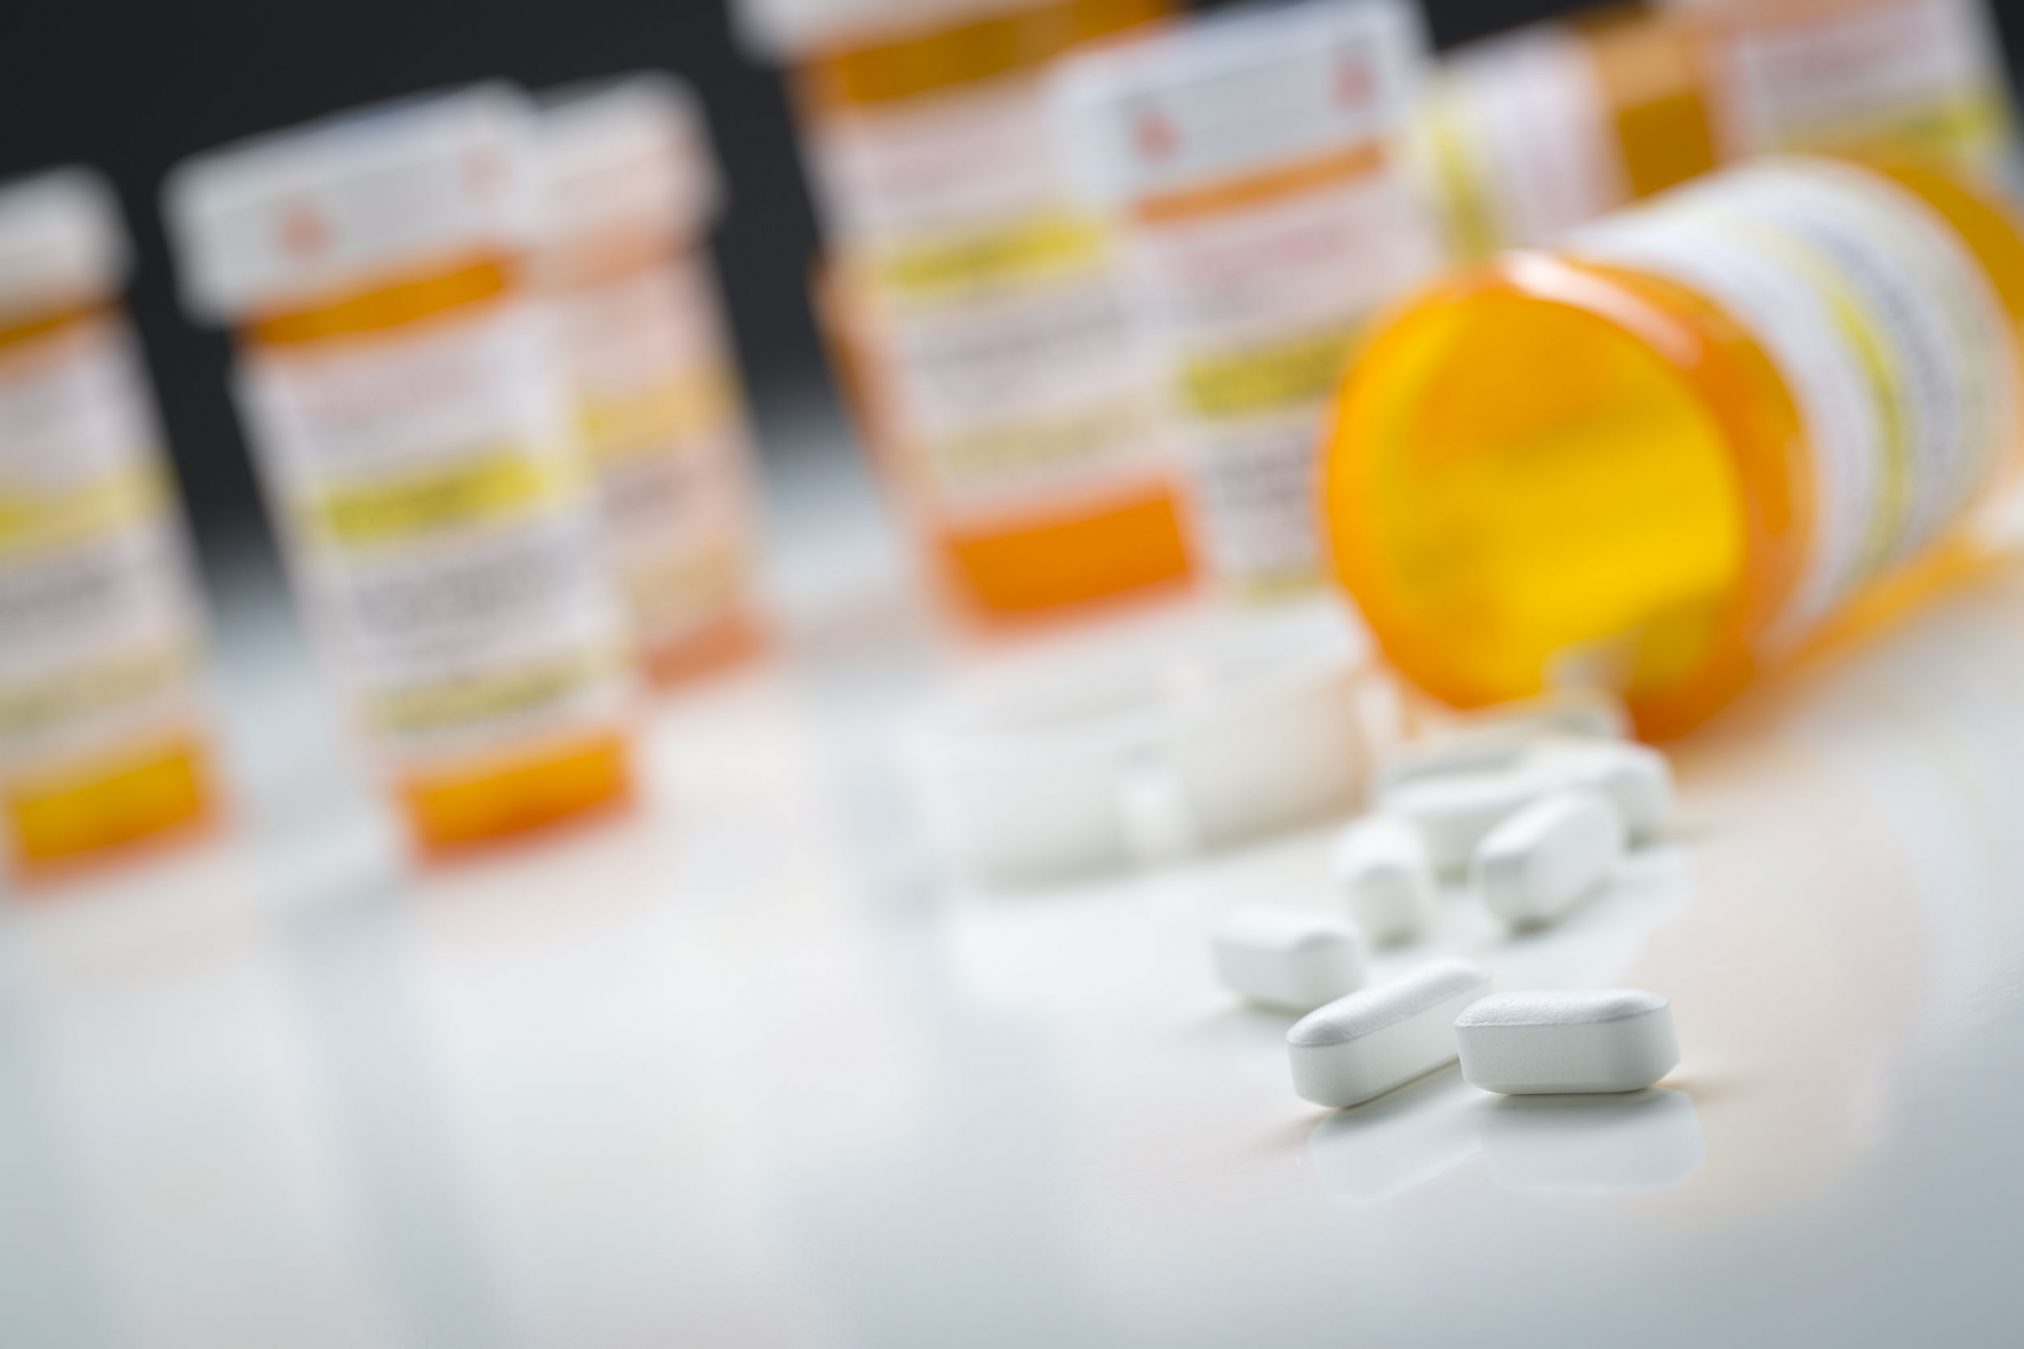 prescription drugs opioid deaths inquest addictive drugs dependence